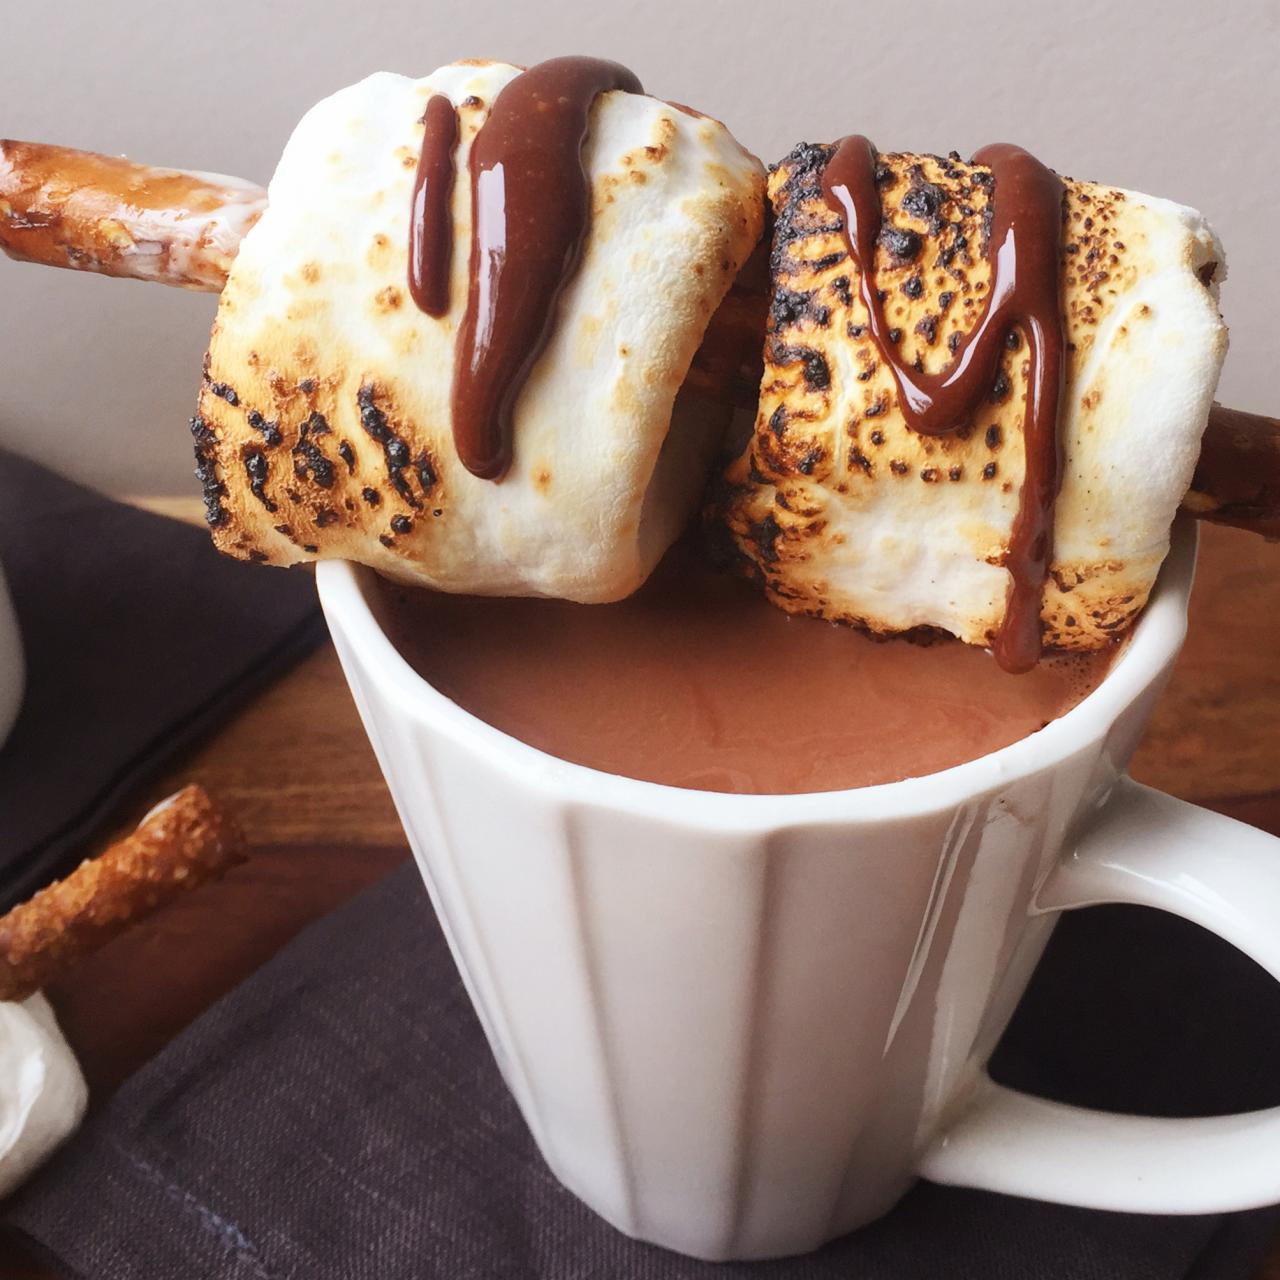 Hot cocoa bar ideas to melt the winter blues